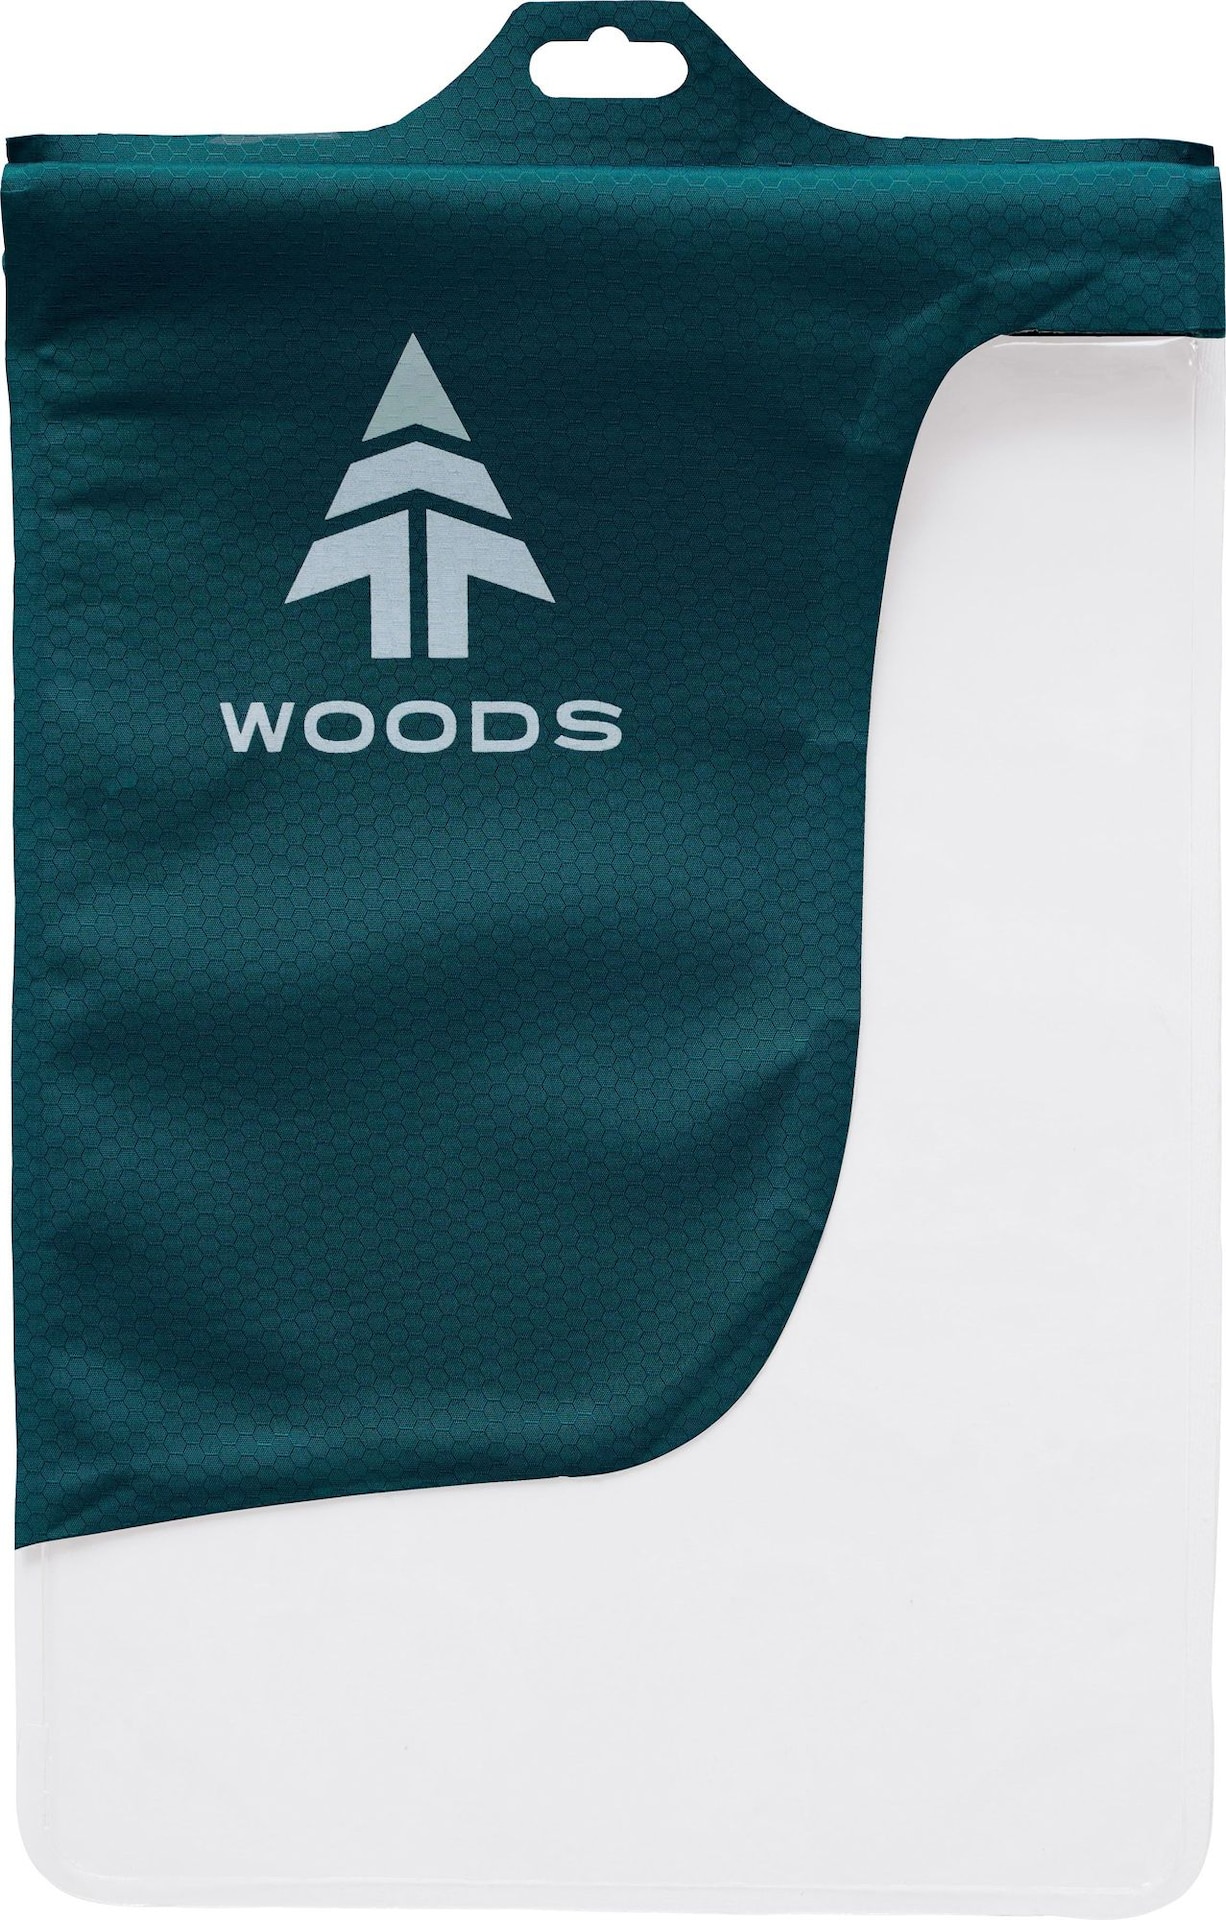 Woods Large Waterproof Tablet Dry Bag Pouch w/ Zip Seal & Velcro